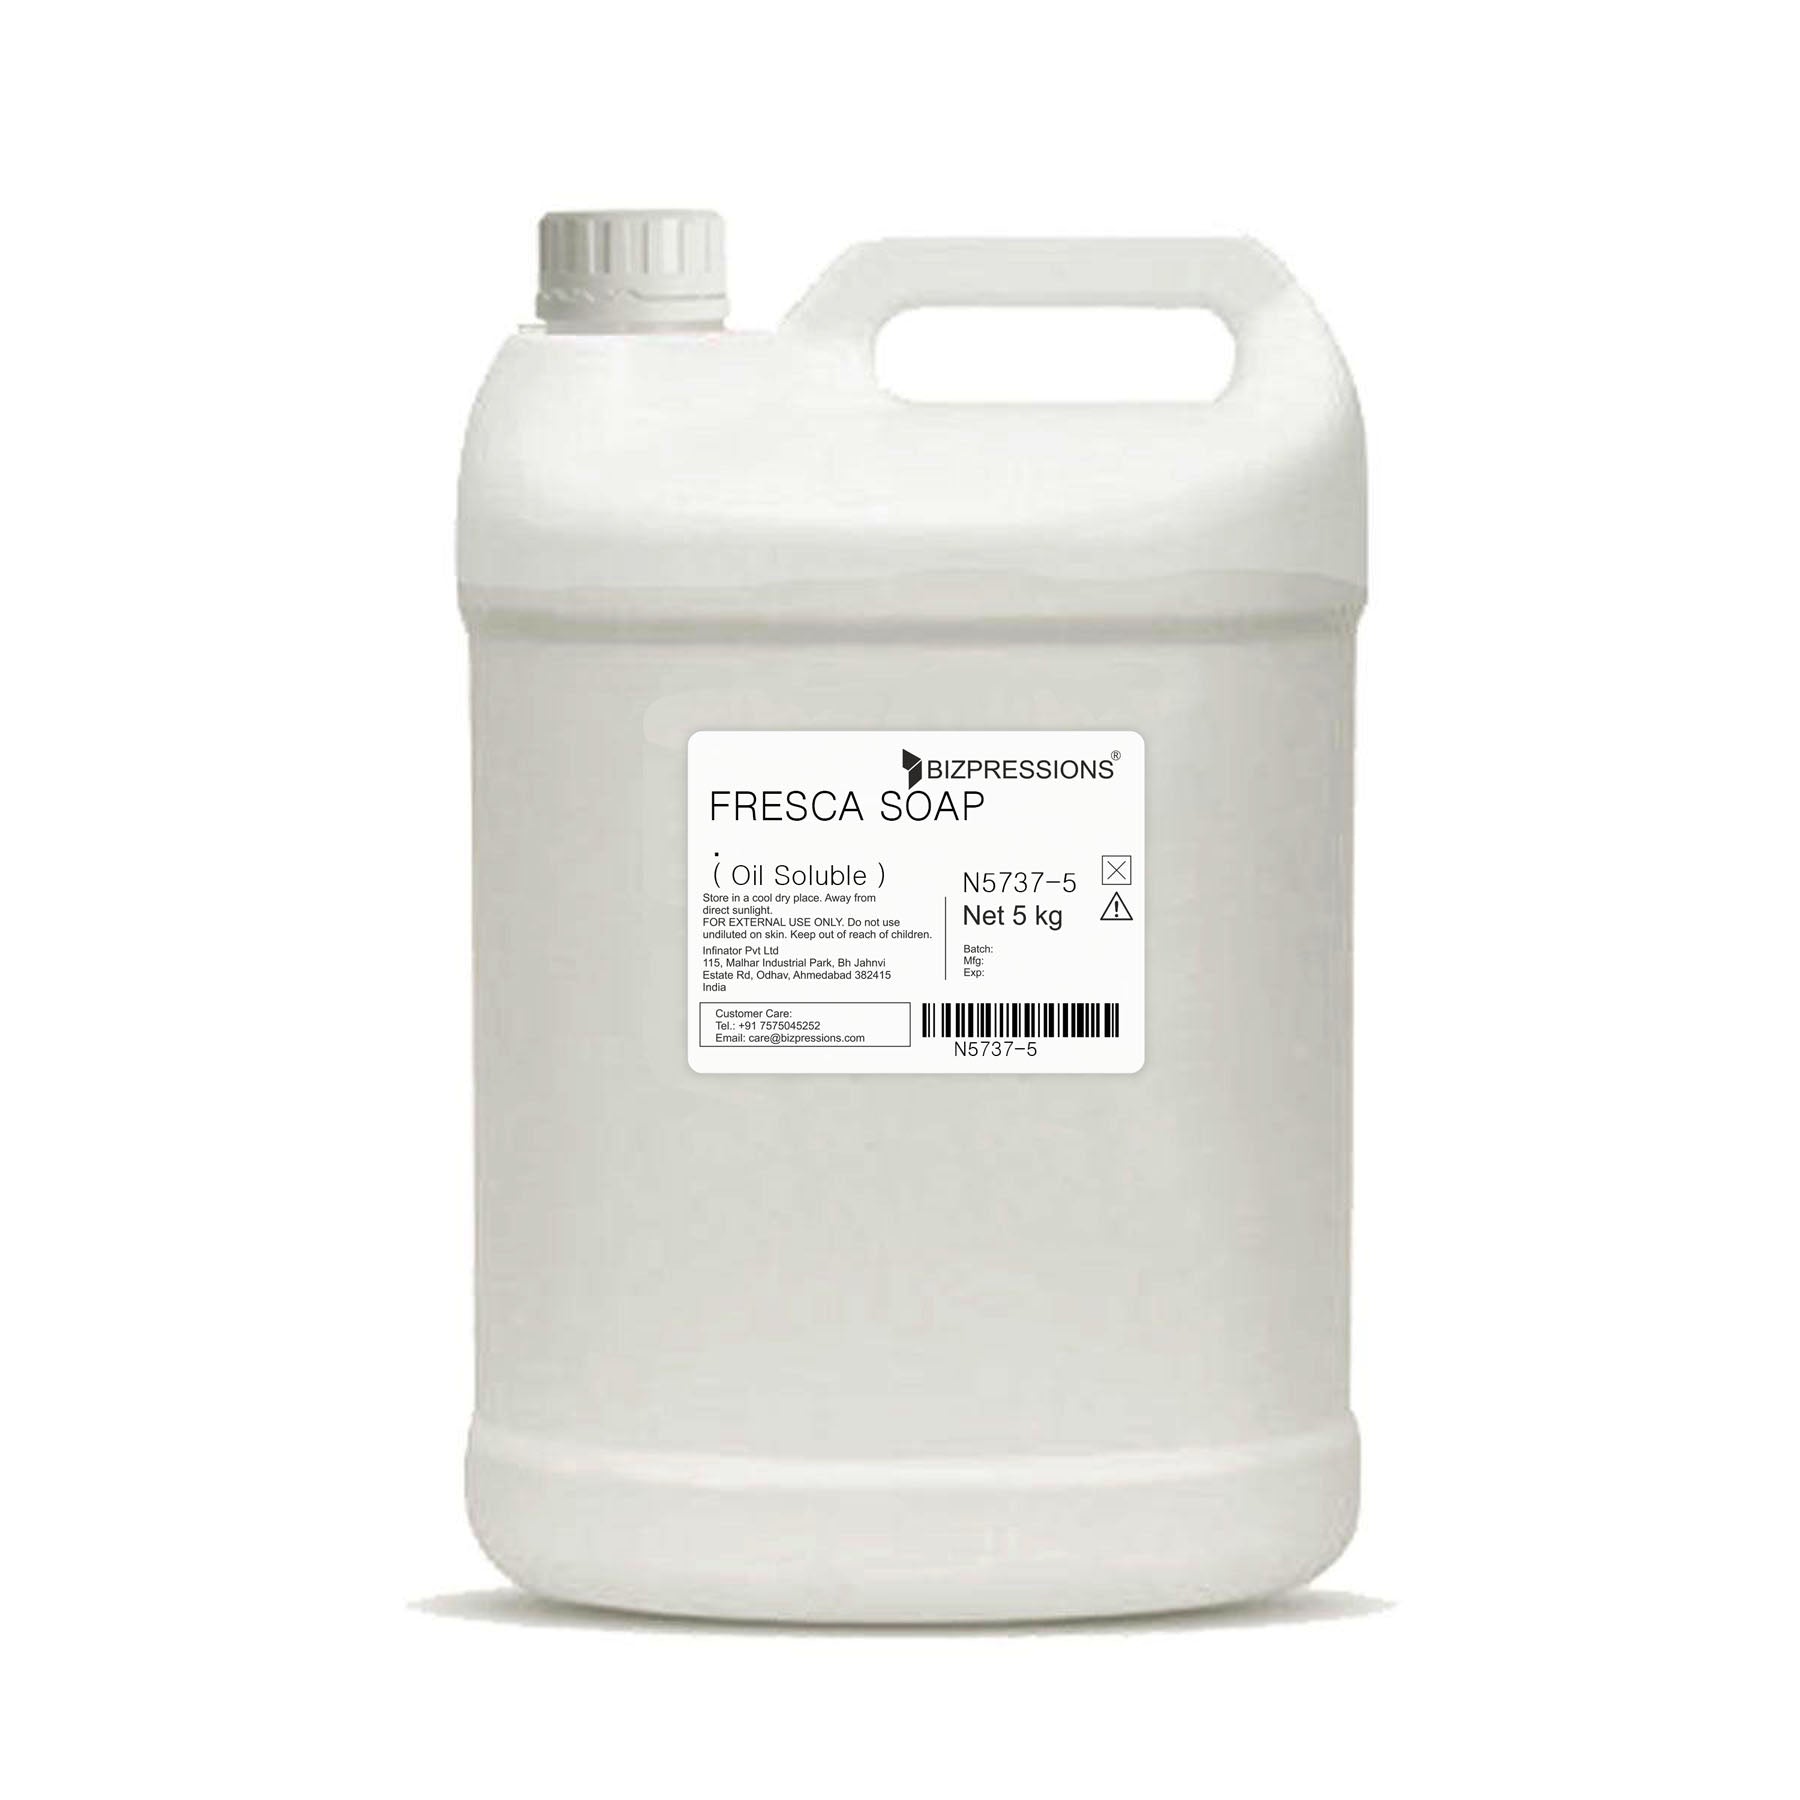 FRESCA SOAP - Fragrance ( Oil Soluble ) - 5 kg